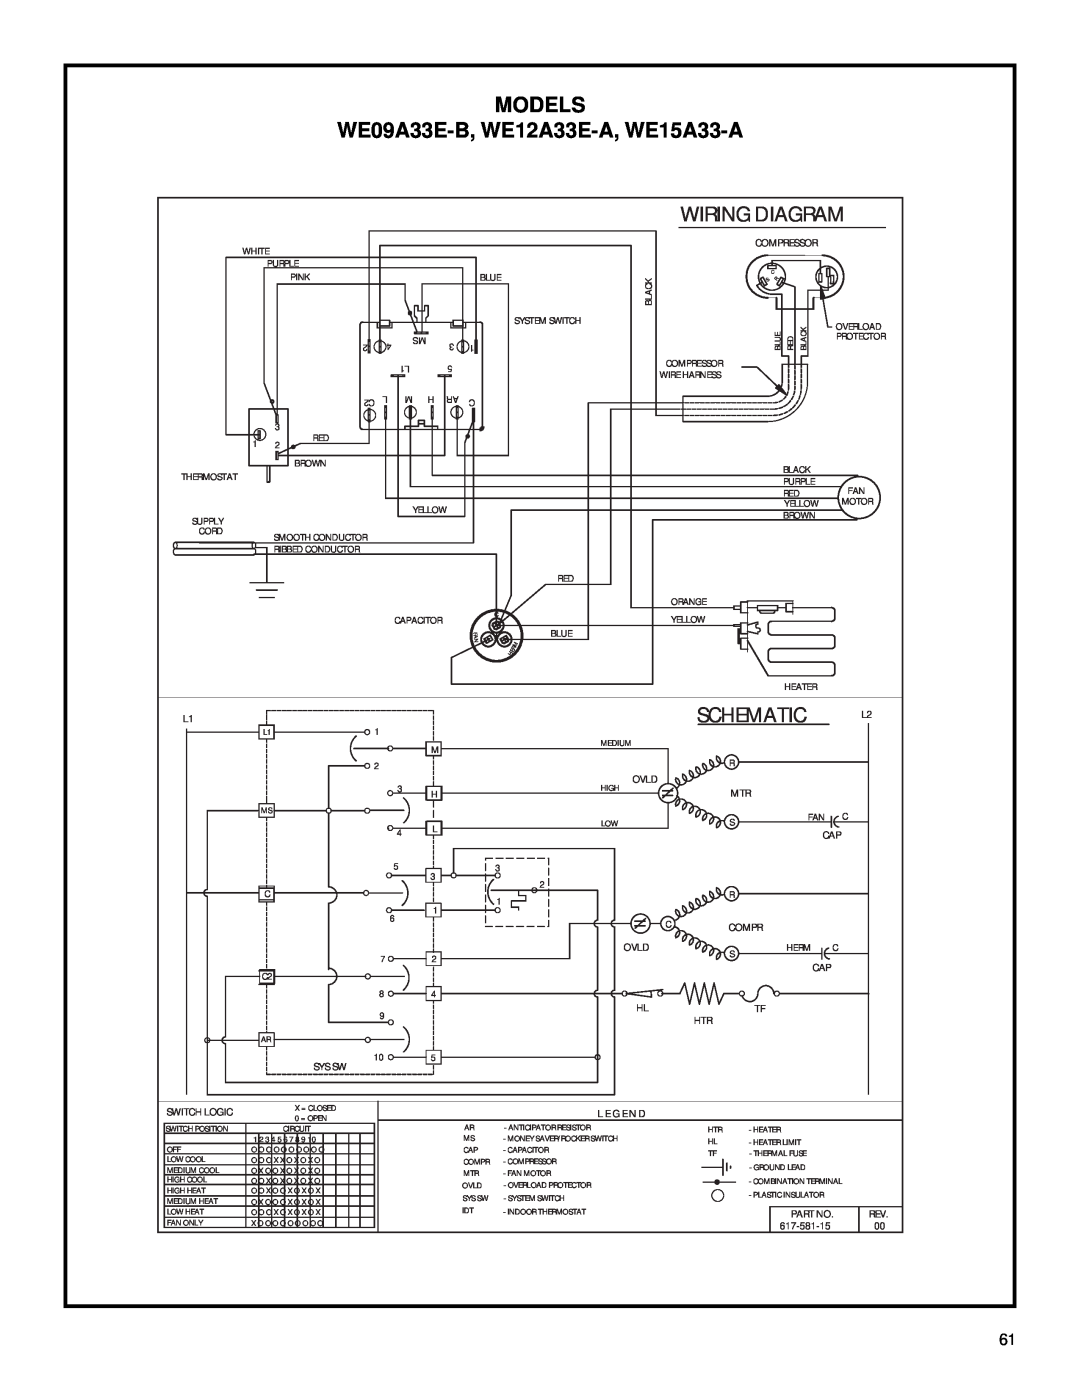 Friedrich racservmn service manual WE09A33E-B, WE12A33E-A, WE15A33-A, Wiring Diagram, Schematic, Models 